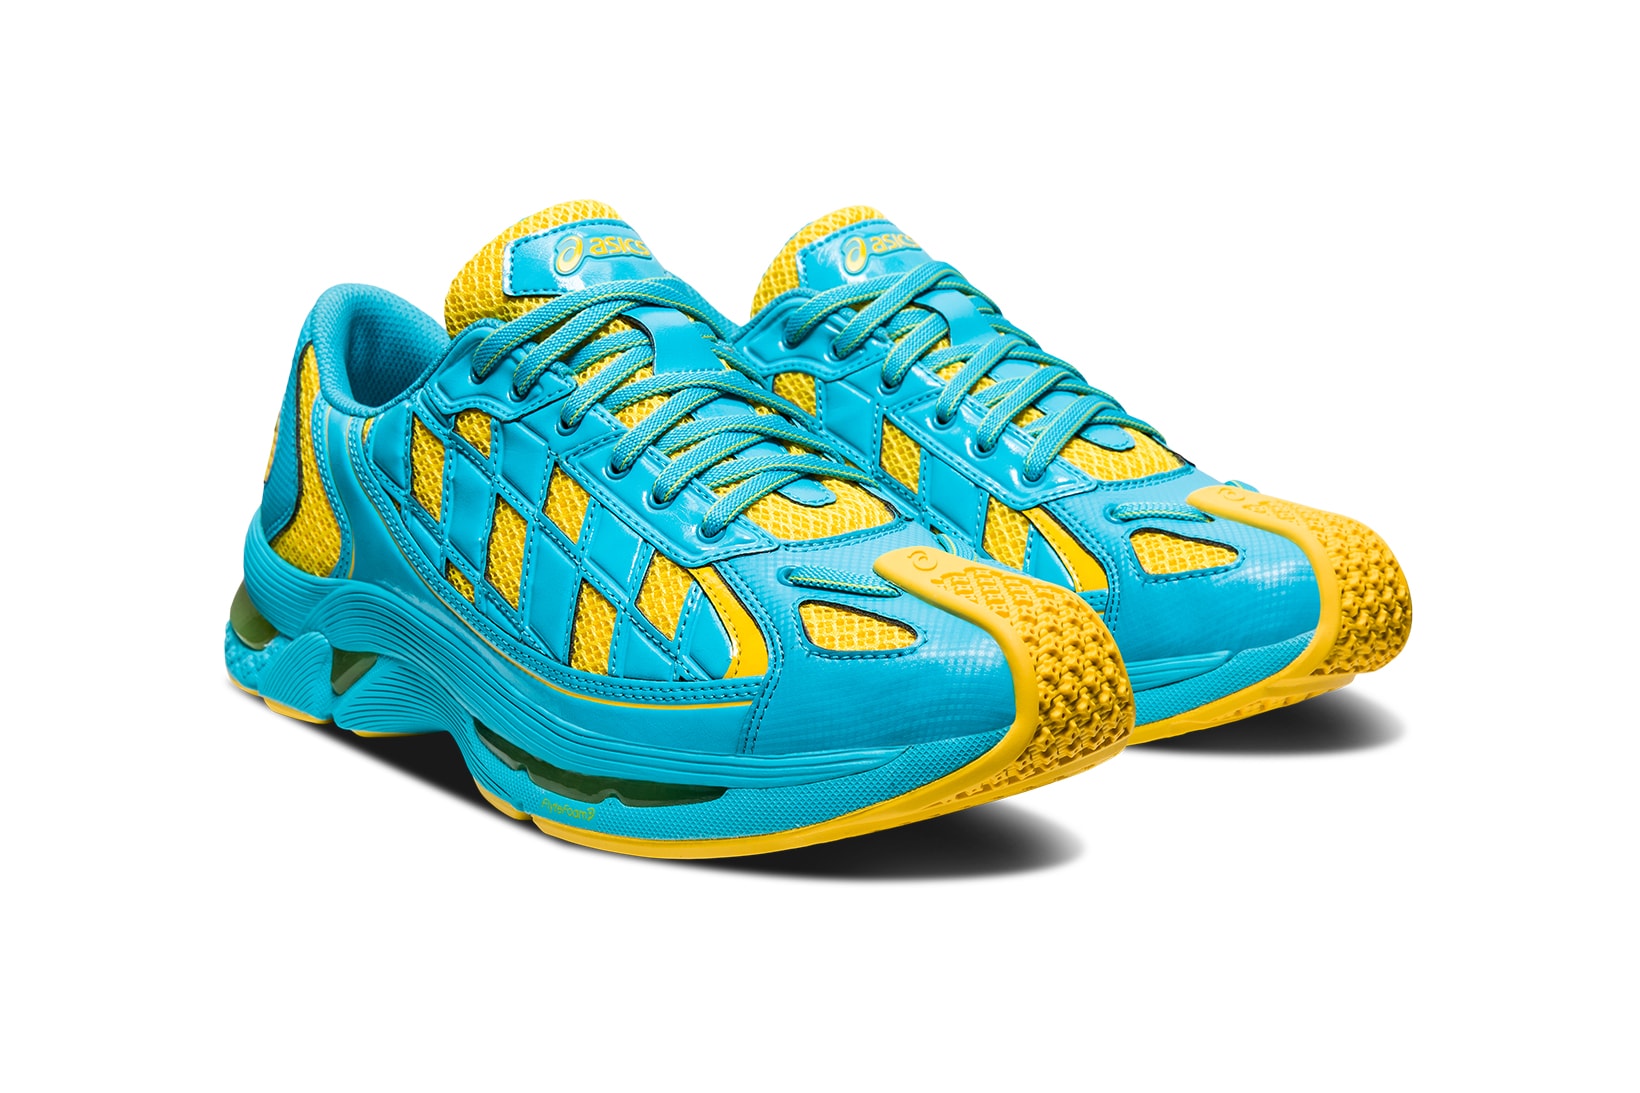 asics kiko kostadinov collaboration gel kiril blue yellow sneakers shoes footwear sneakerhead